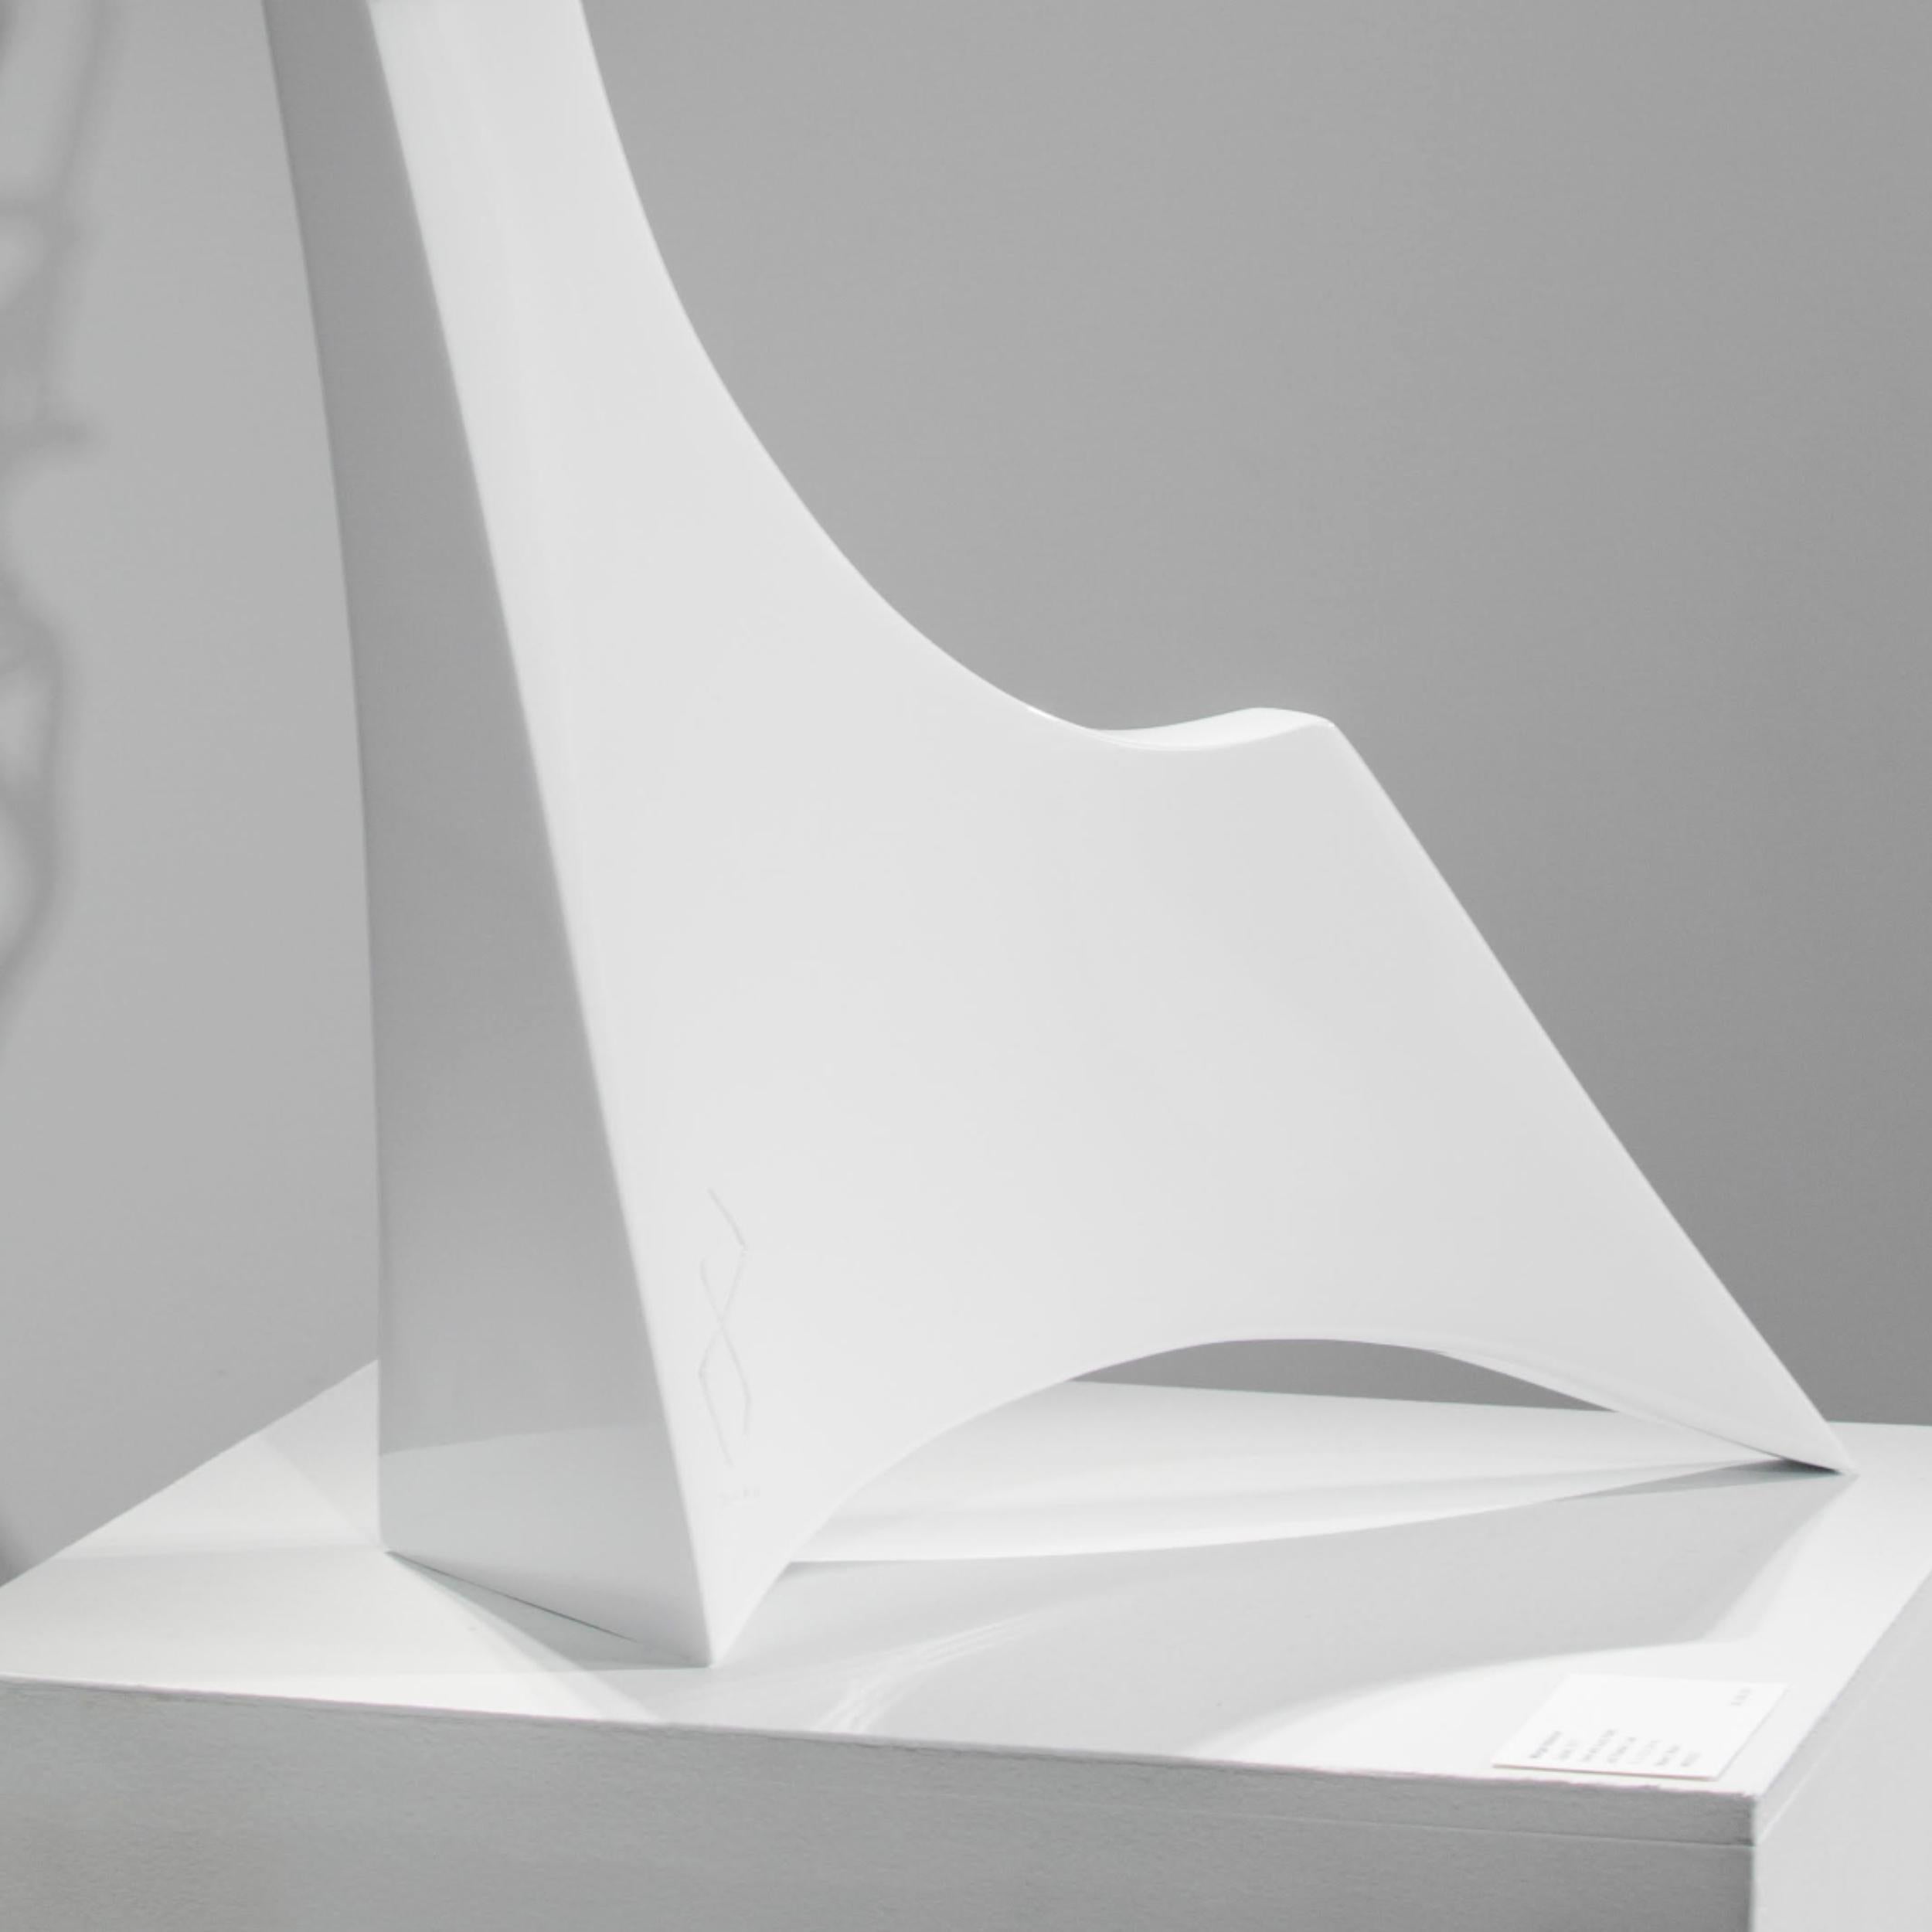 SIGNALS - Gray Abstract Sculpture by Morgan Robinson